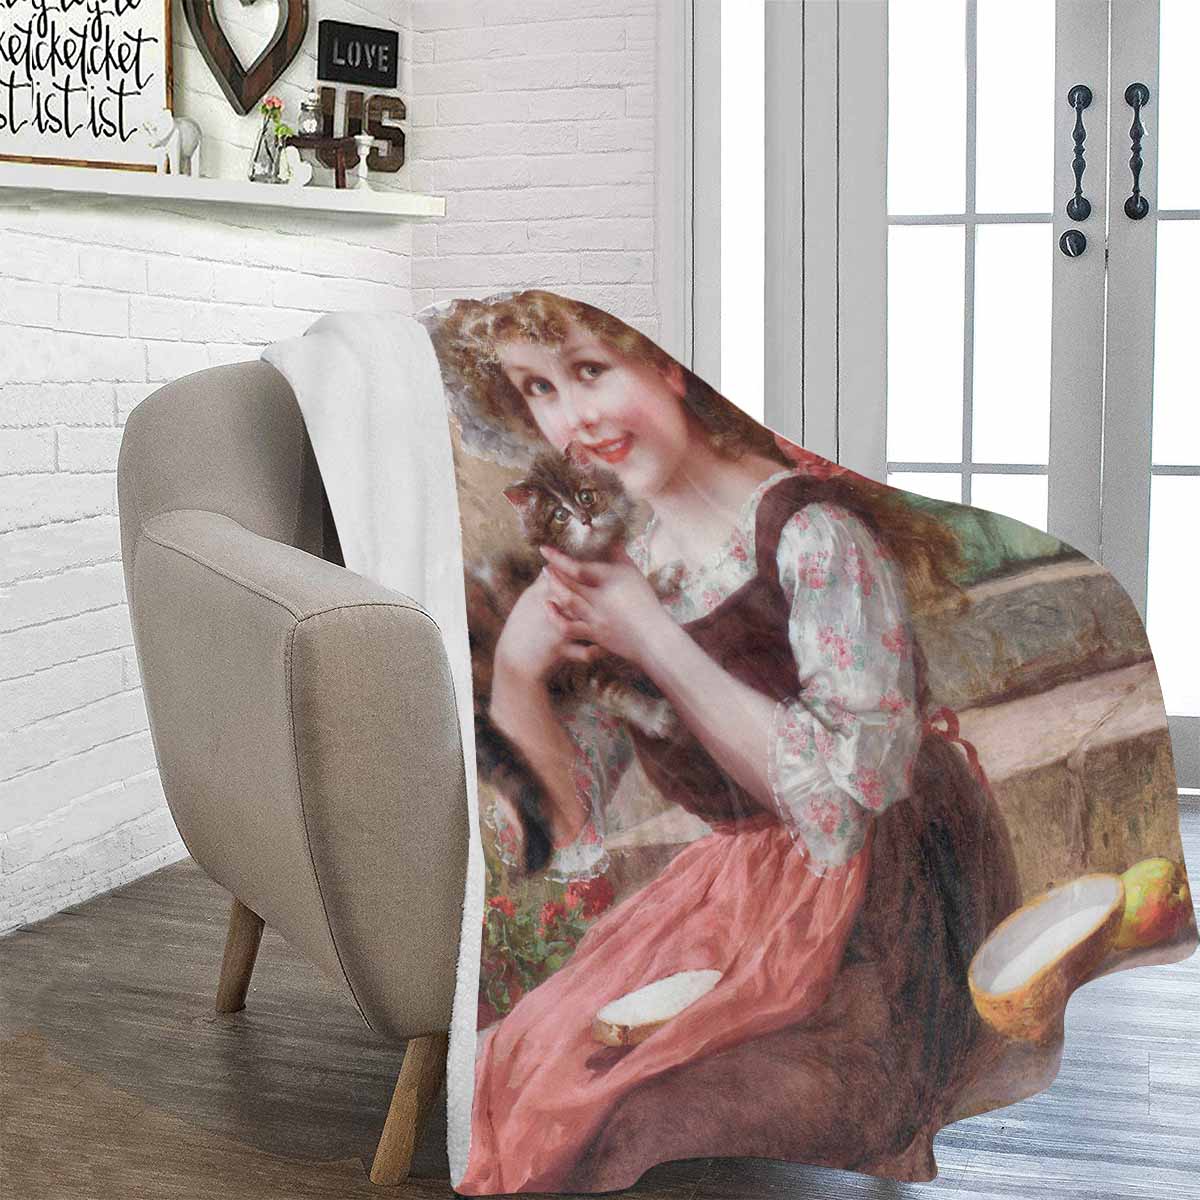 Victorian Girl Design BLANKET, LARGE 60 in x 80 in, The Little Kittens